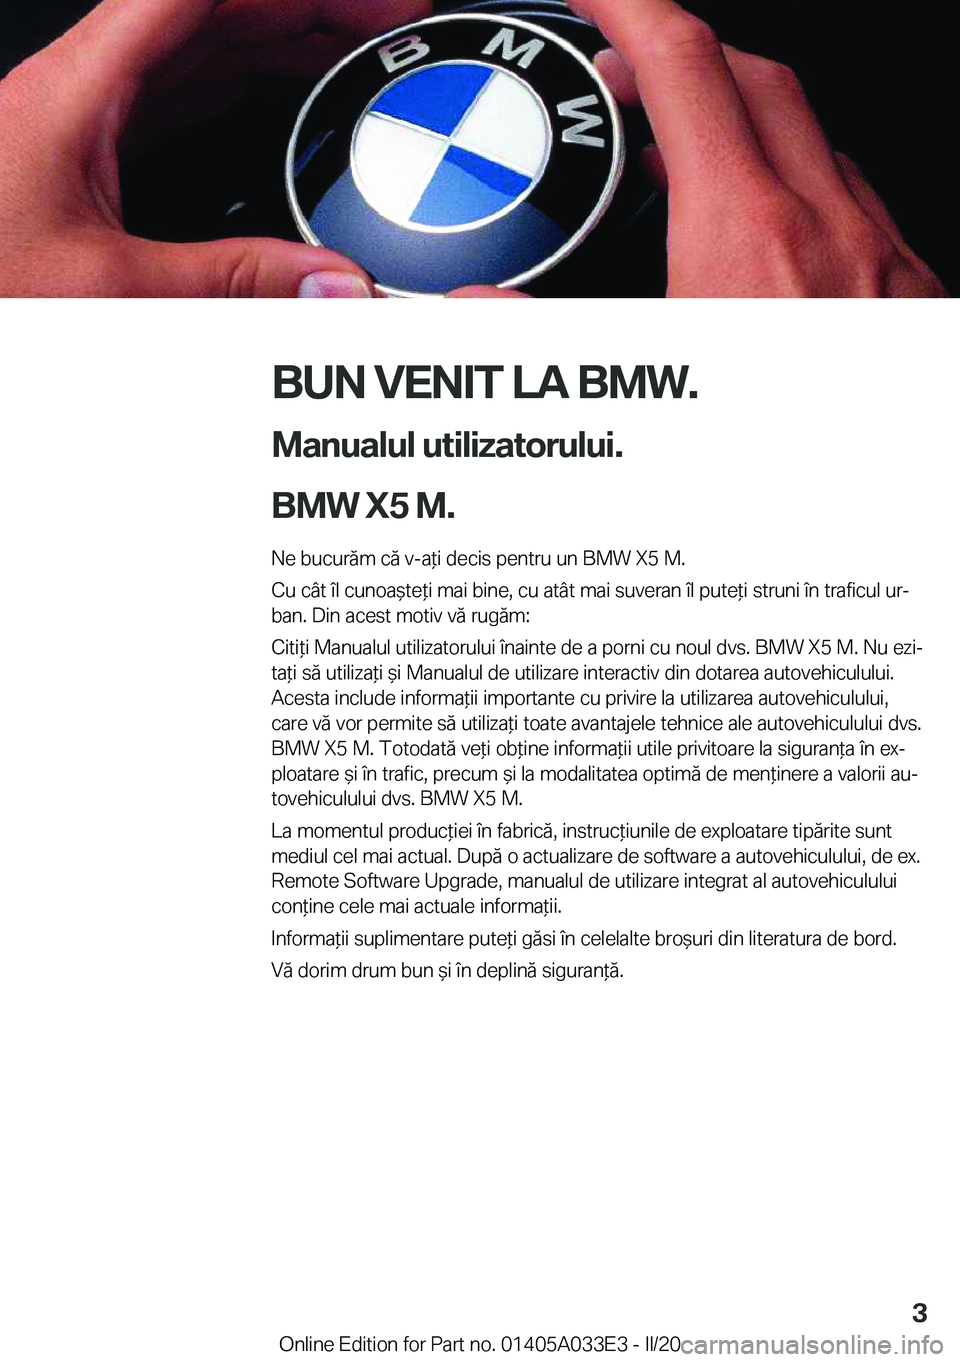 BMW X5 M 2020  Ghiduri De Utilizare (in Romanian) �B�U�N��V�E�N�I�T��L�A��B�M�W�.�M�a�n�u�a�l�u�l��u�t�i�l�i�z�a�t�o�r�u�l�u�i�.
�B�M�W��X�5��M�. �N�e��b�u�c�u�r�ă�m��c�ă��v�-�a*�i��d�e�c�i�s��p�e�n�t�r�u��u�n��B�M�W��X�5��M�.
�C�u�